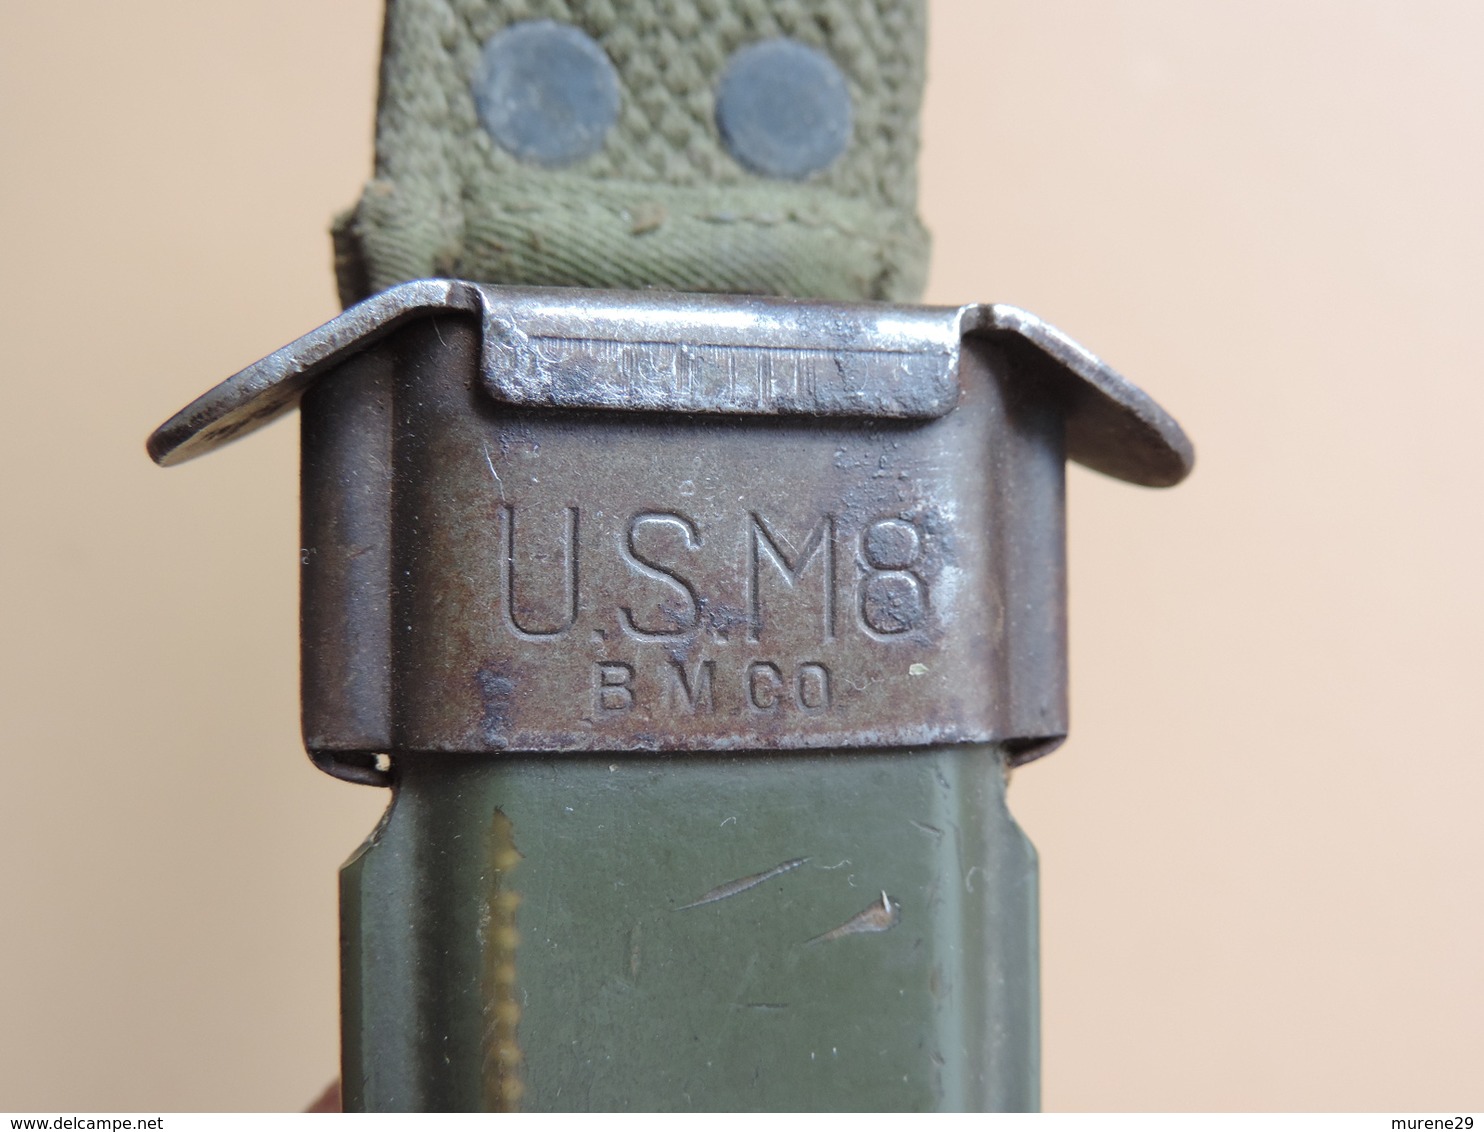 Poignard USM3 CASE à marquage sur la garde, US WW2.